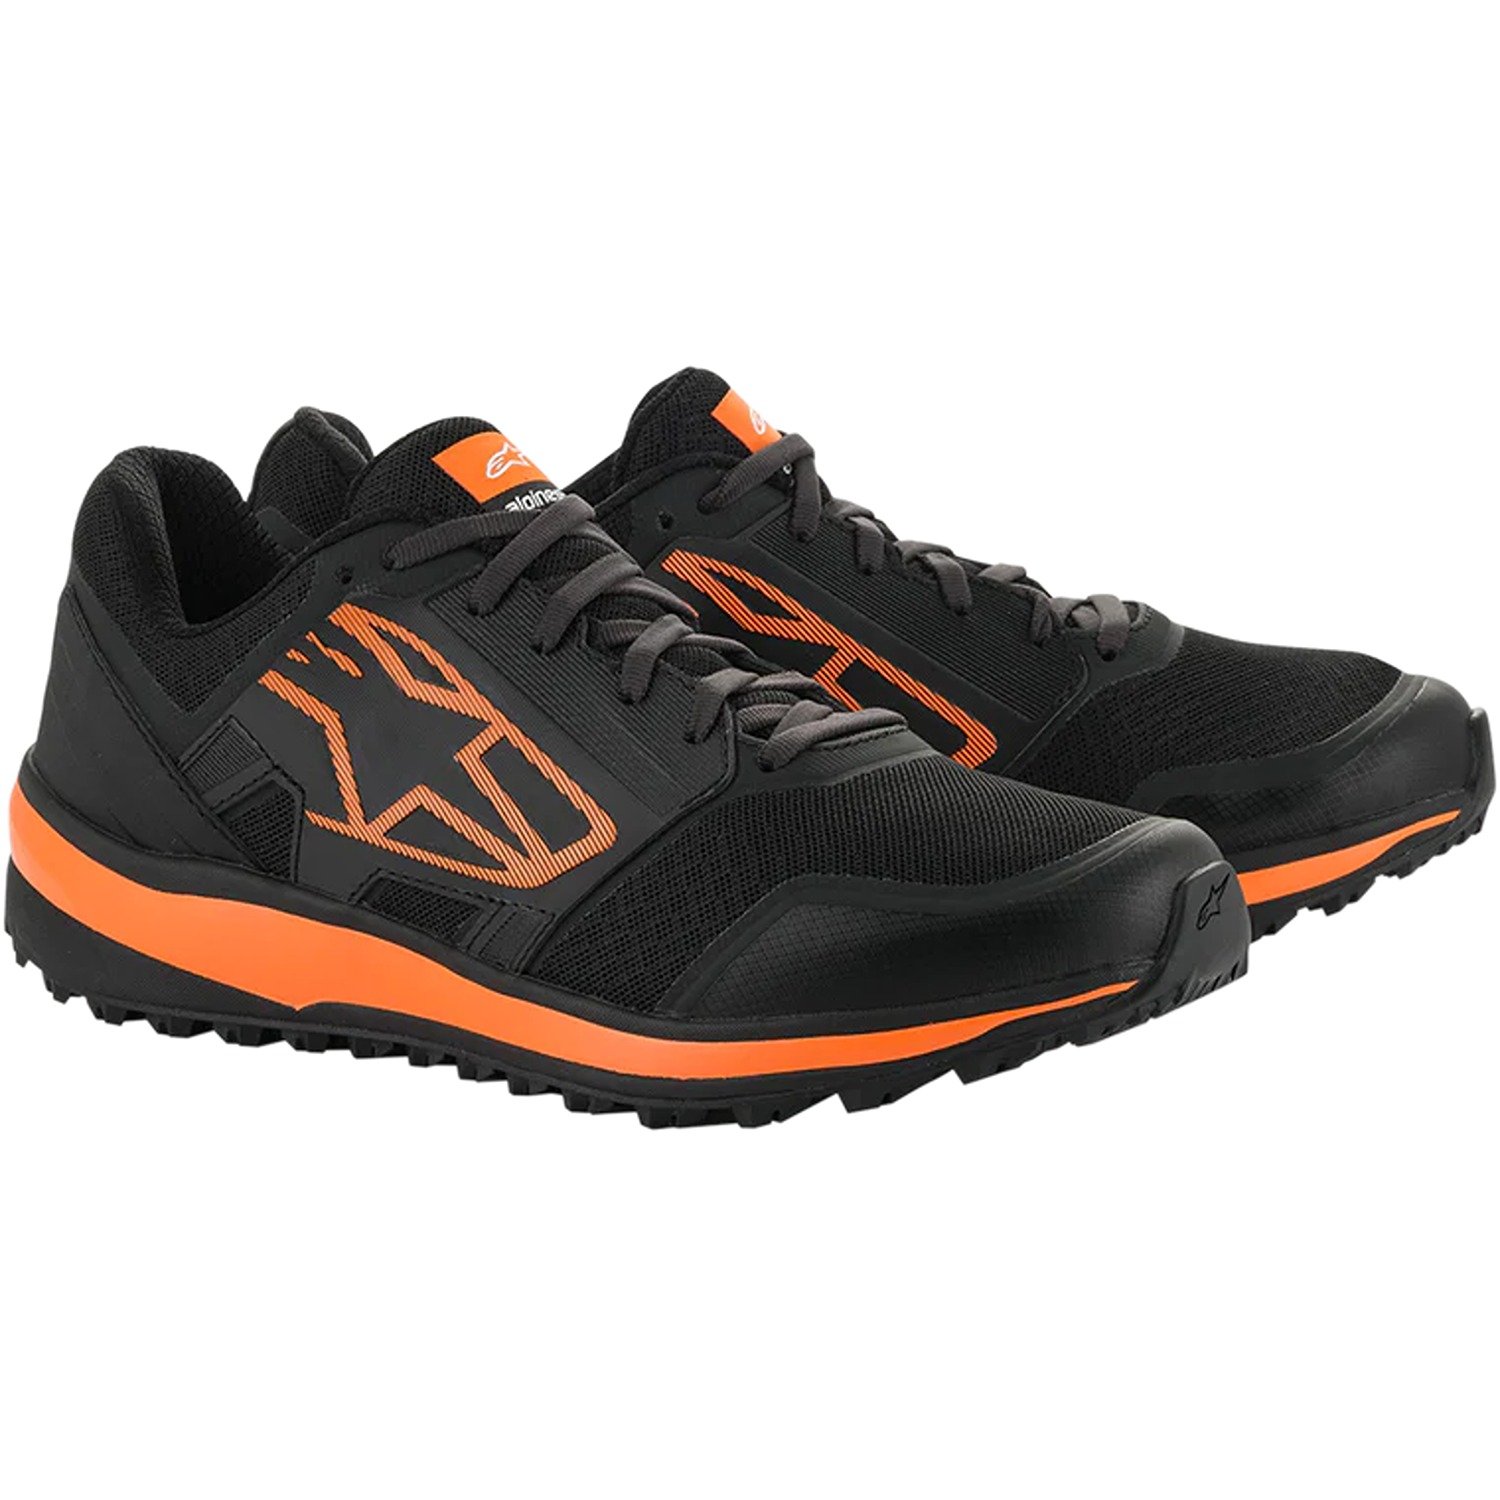 Image of EU Alpinestars Meta Trail Shoes Black Orange Taille US 6